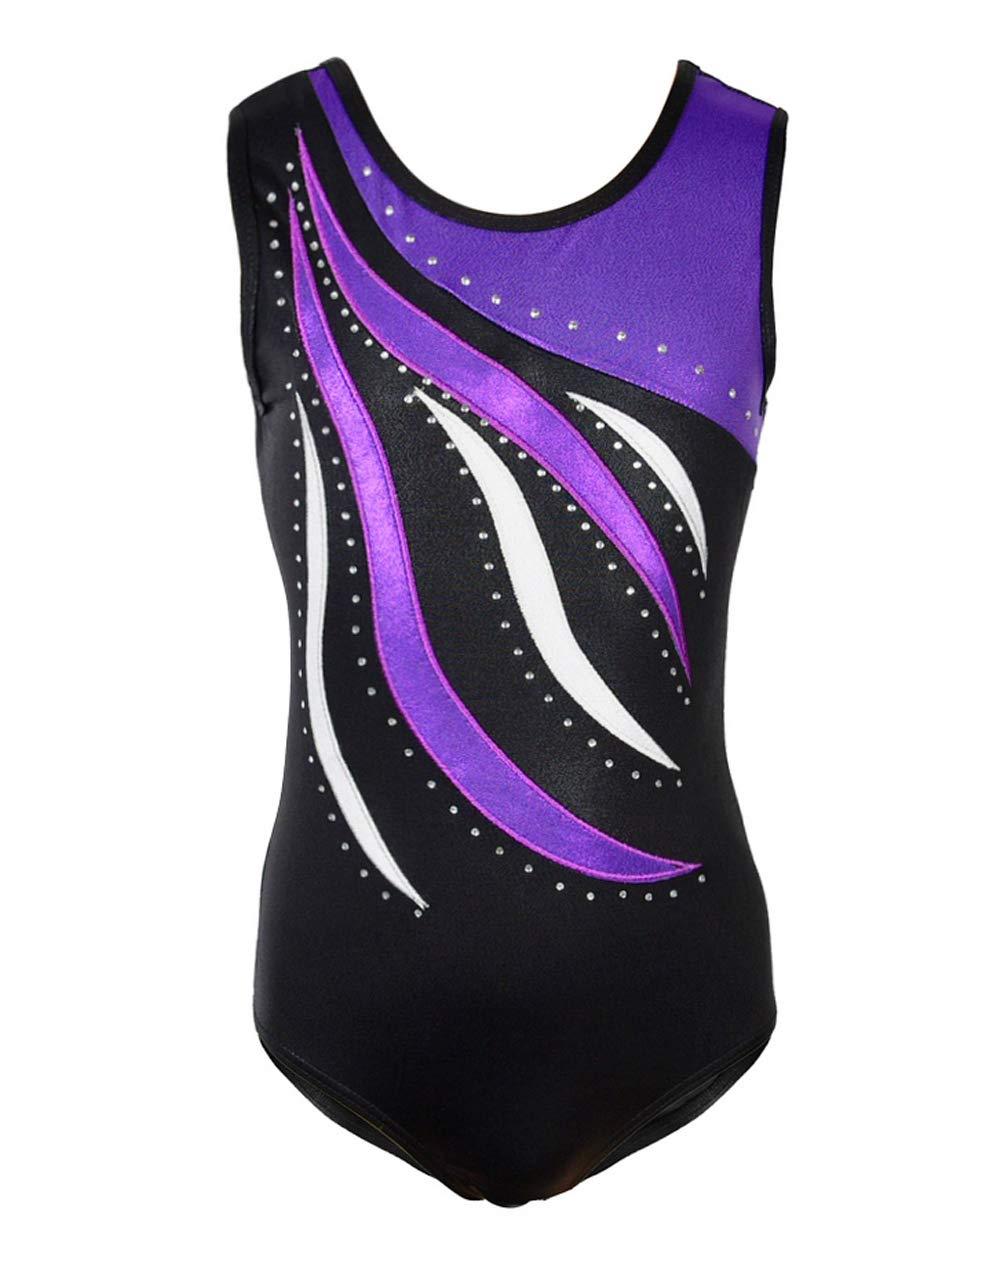 [AUSTRALIA] - Happy Cherry Girls Dance Leotard Sleeveless Gymnastic Shiny Stripes Athletic Bodysuit 4-16Y Purple Tag 8/7-8Y 